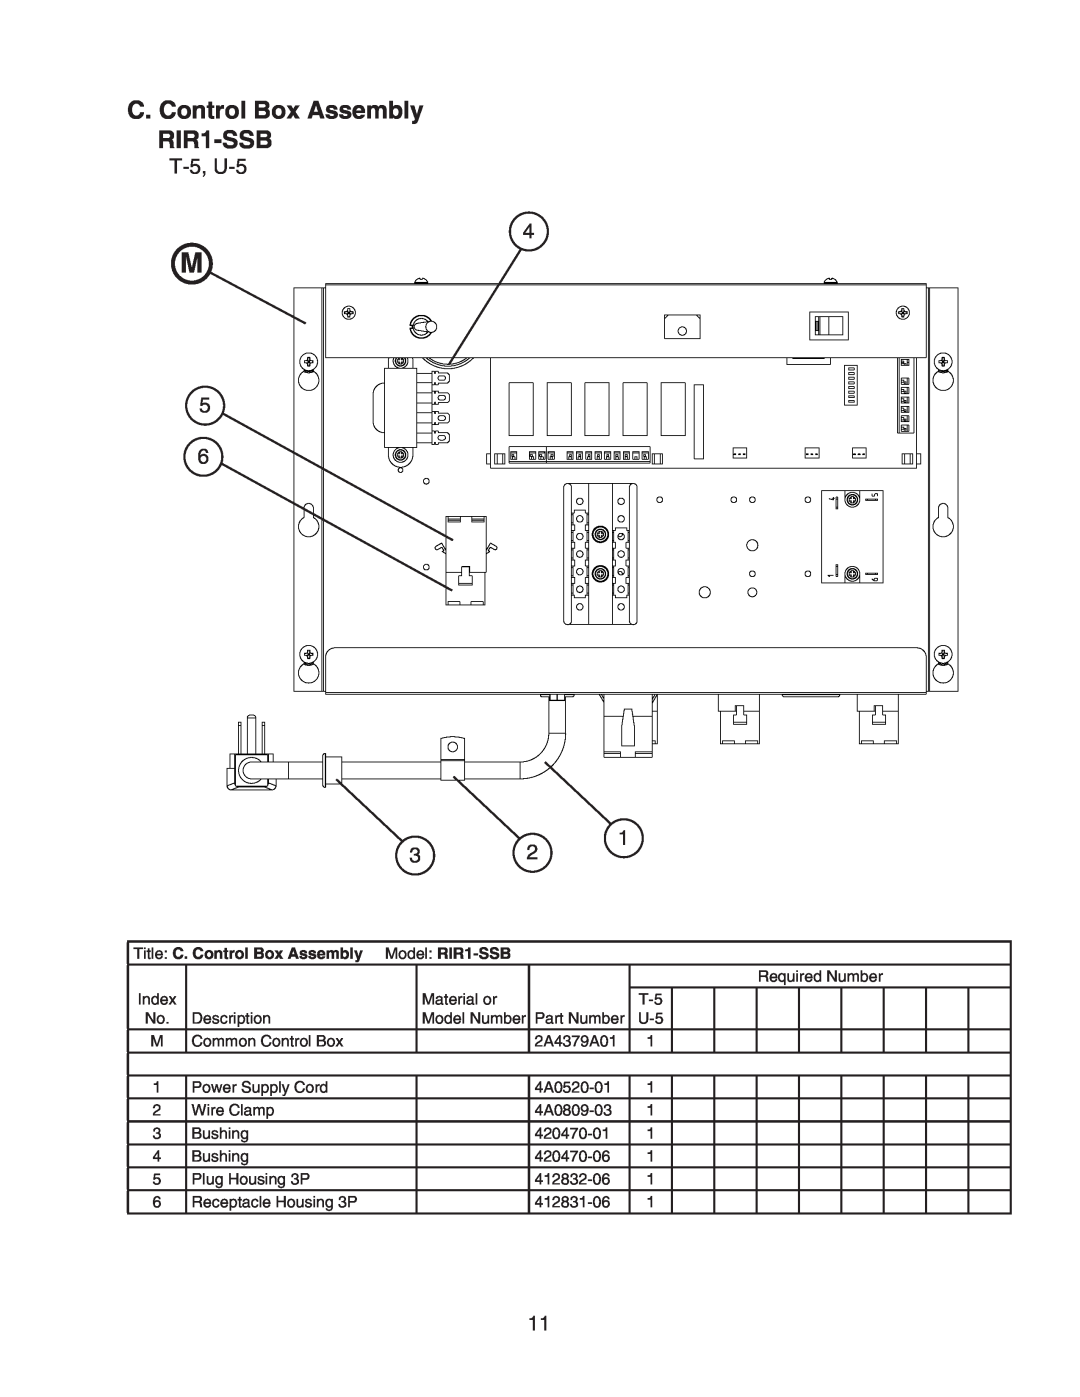 Hoshizaki manual C. Control Box Assembly RIR1-SSB, Title C. Control Box Assembly, Model RIR1-SSB 